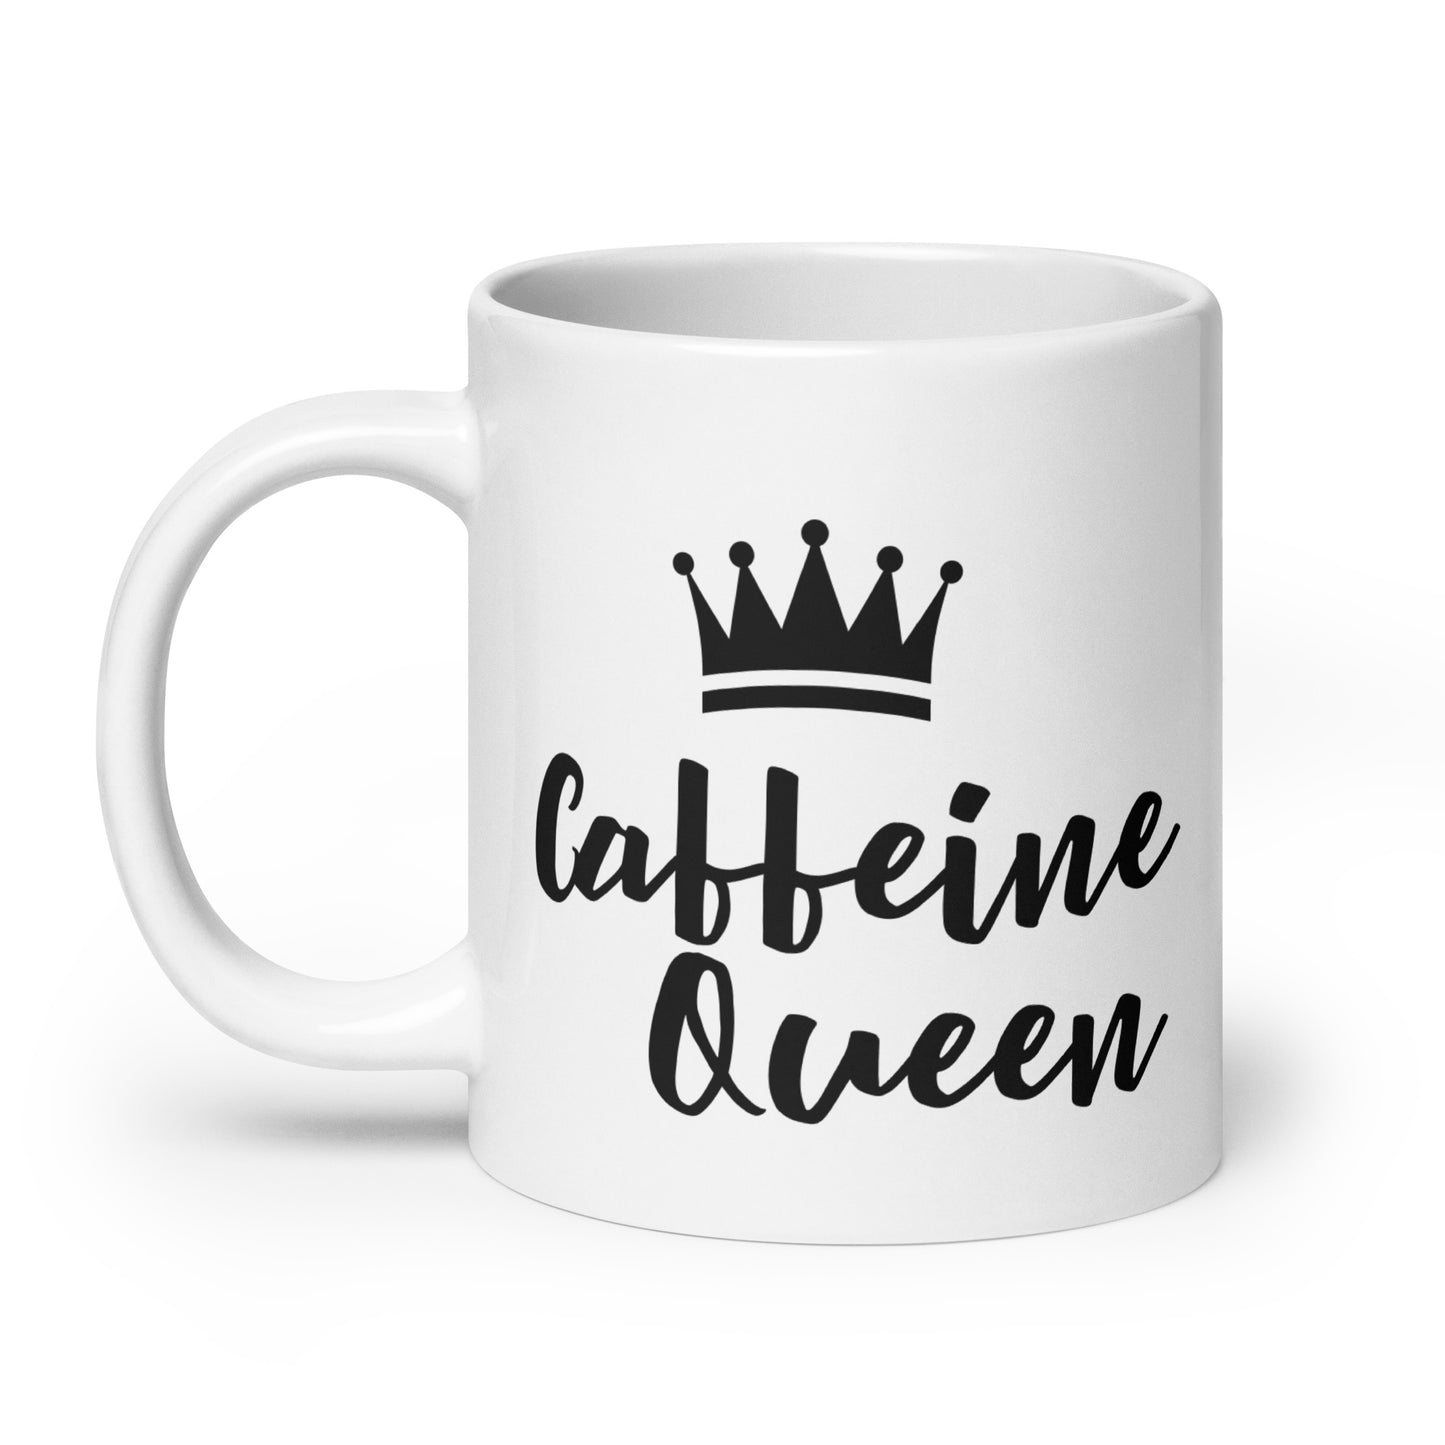 Caffeine Queen White Glossy Mug